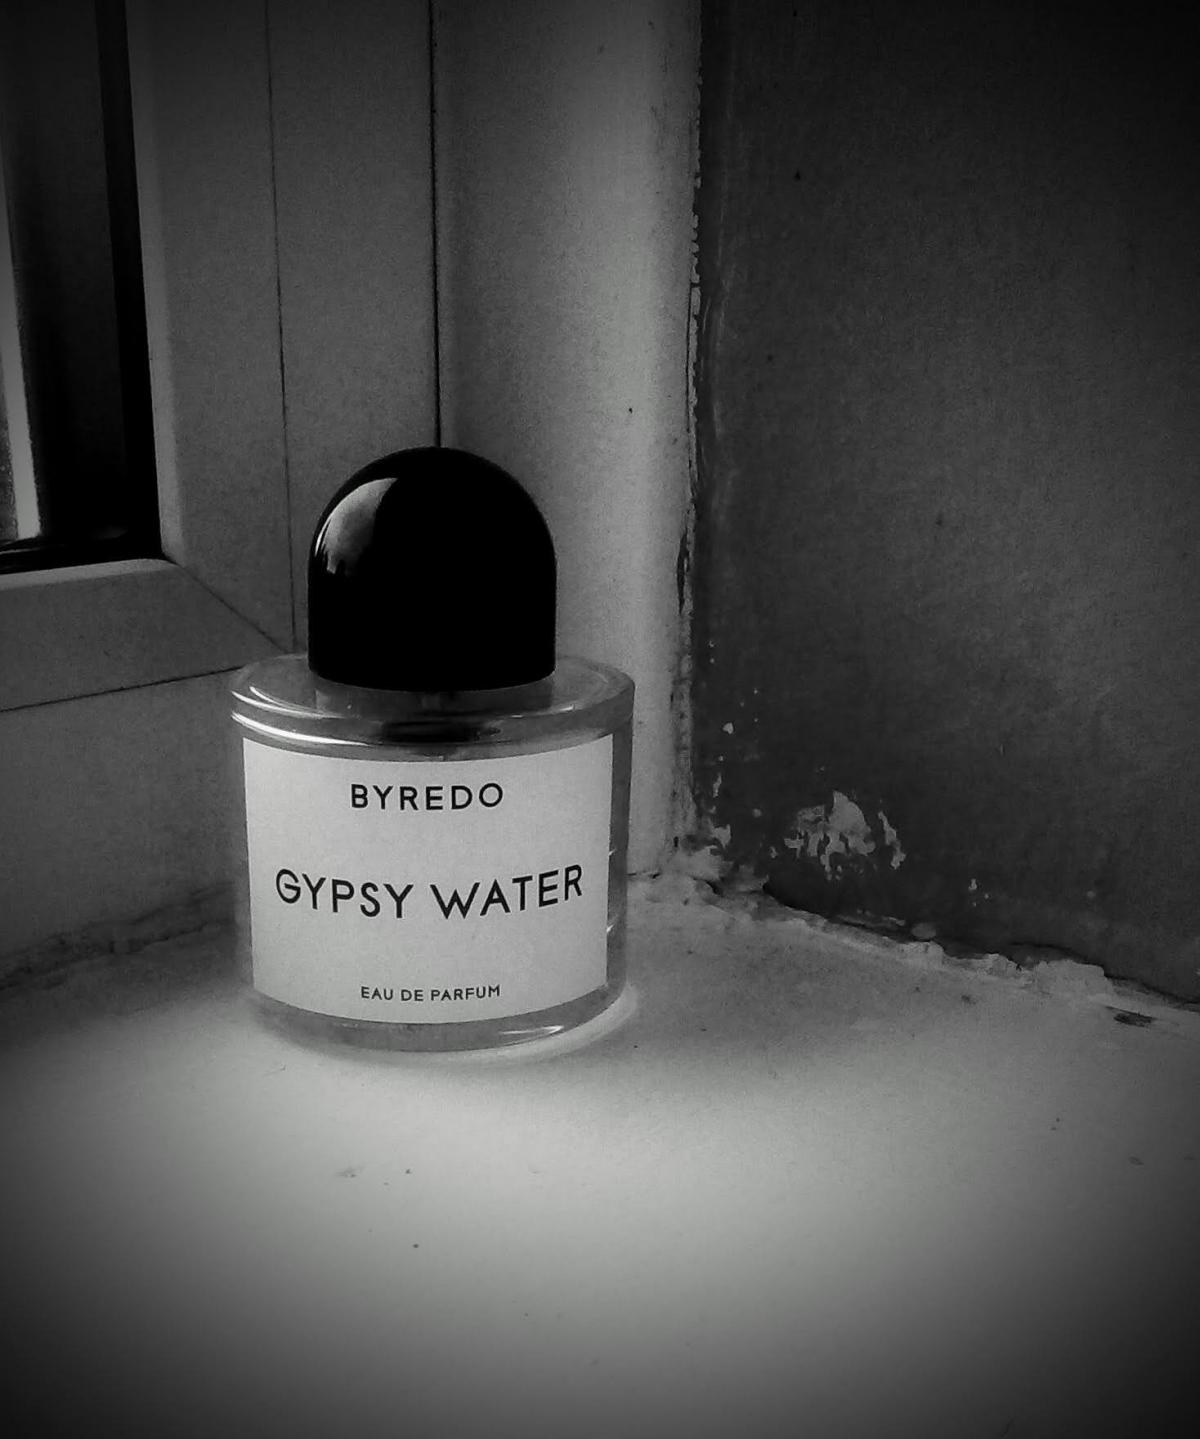 Байредо джипси ватер. Духи Byredo Gypsy Water. Byredo Gypsy Water Eau de Parfum. Gypsy Water Byredo женские. Парфюм Байредо цыганская вода.